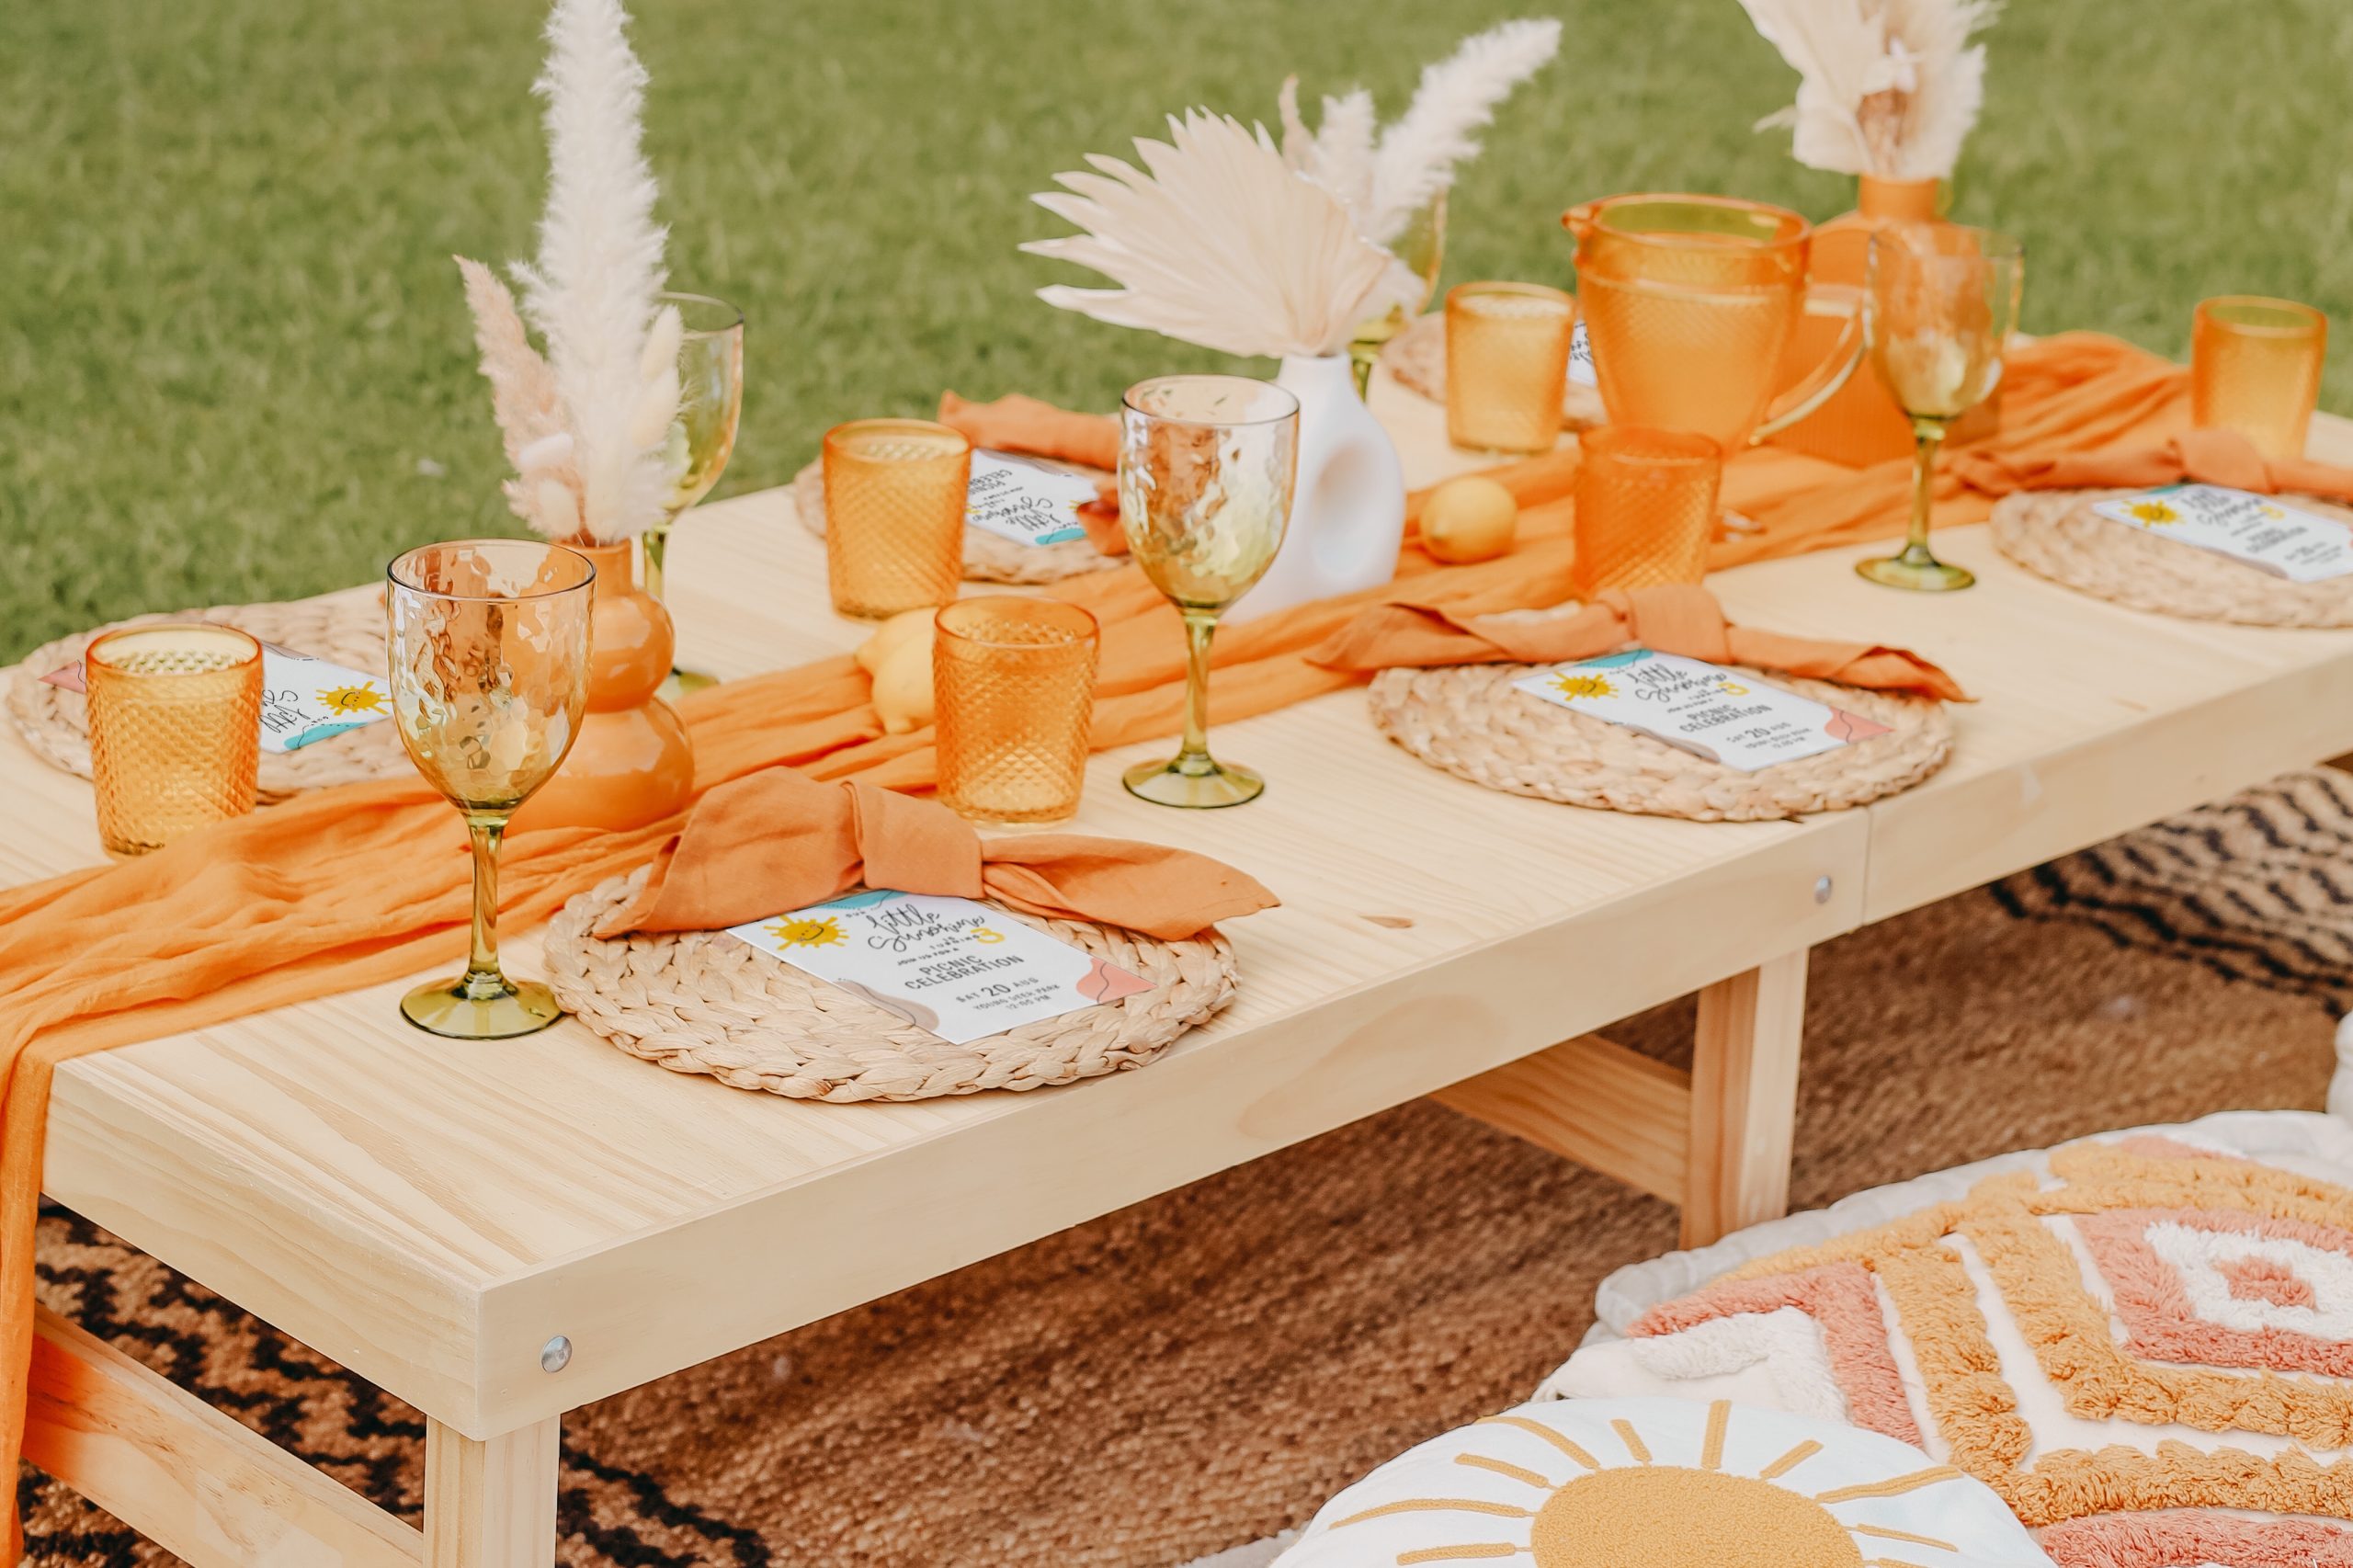 Boho Picnic Setup | Boho themed picnic party